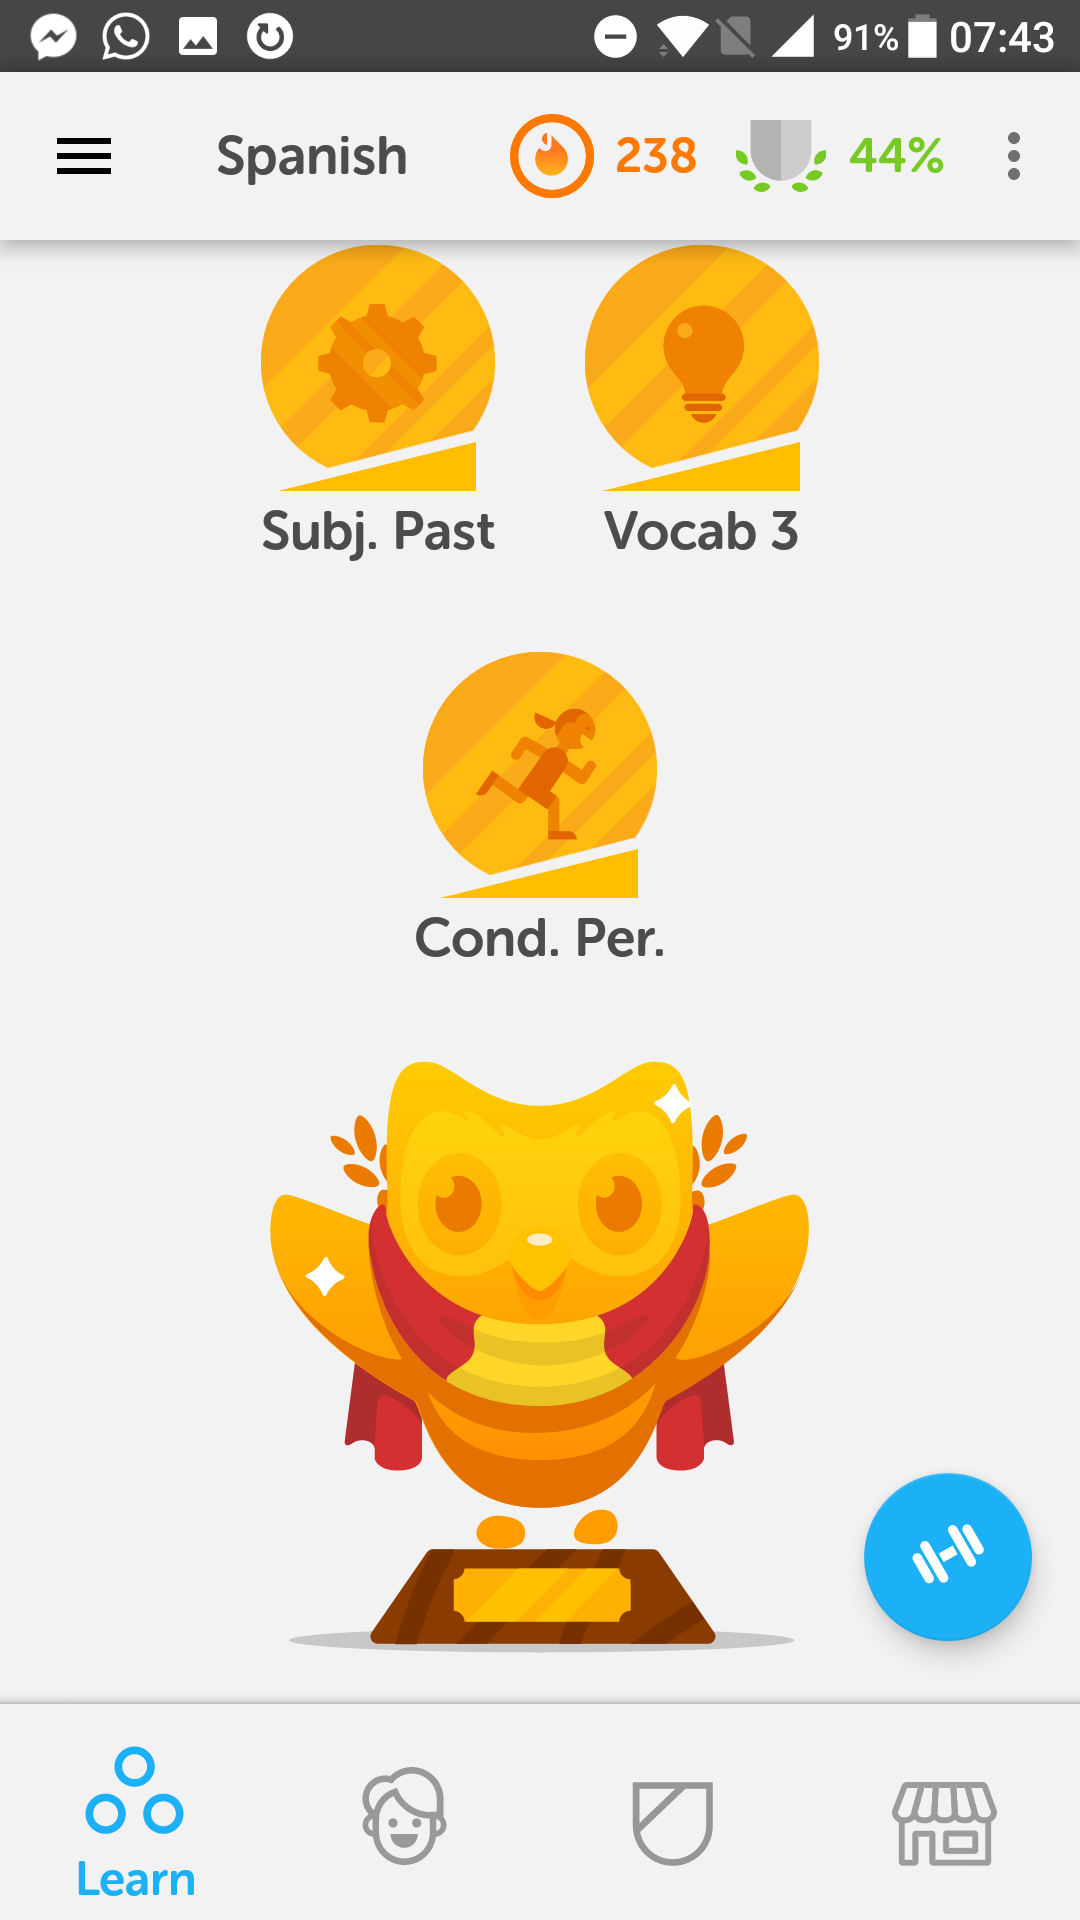 Completing Duolingo